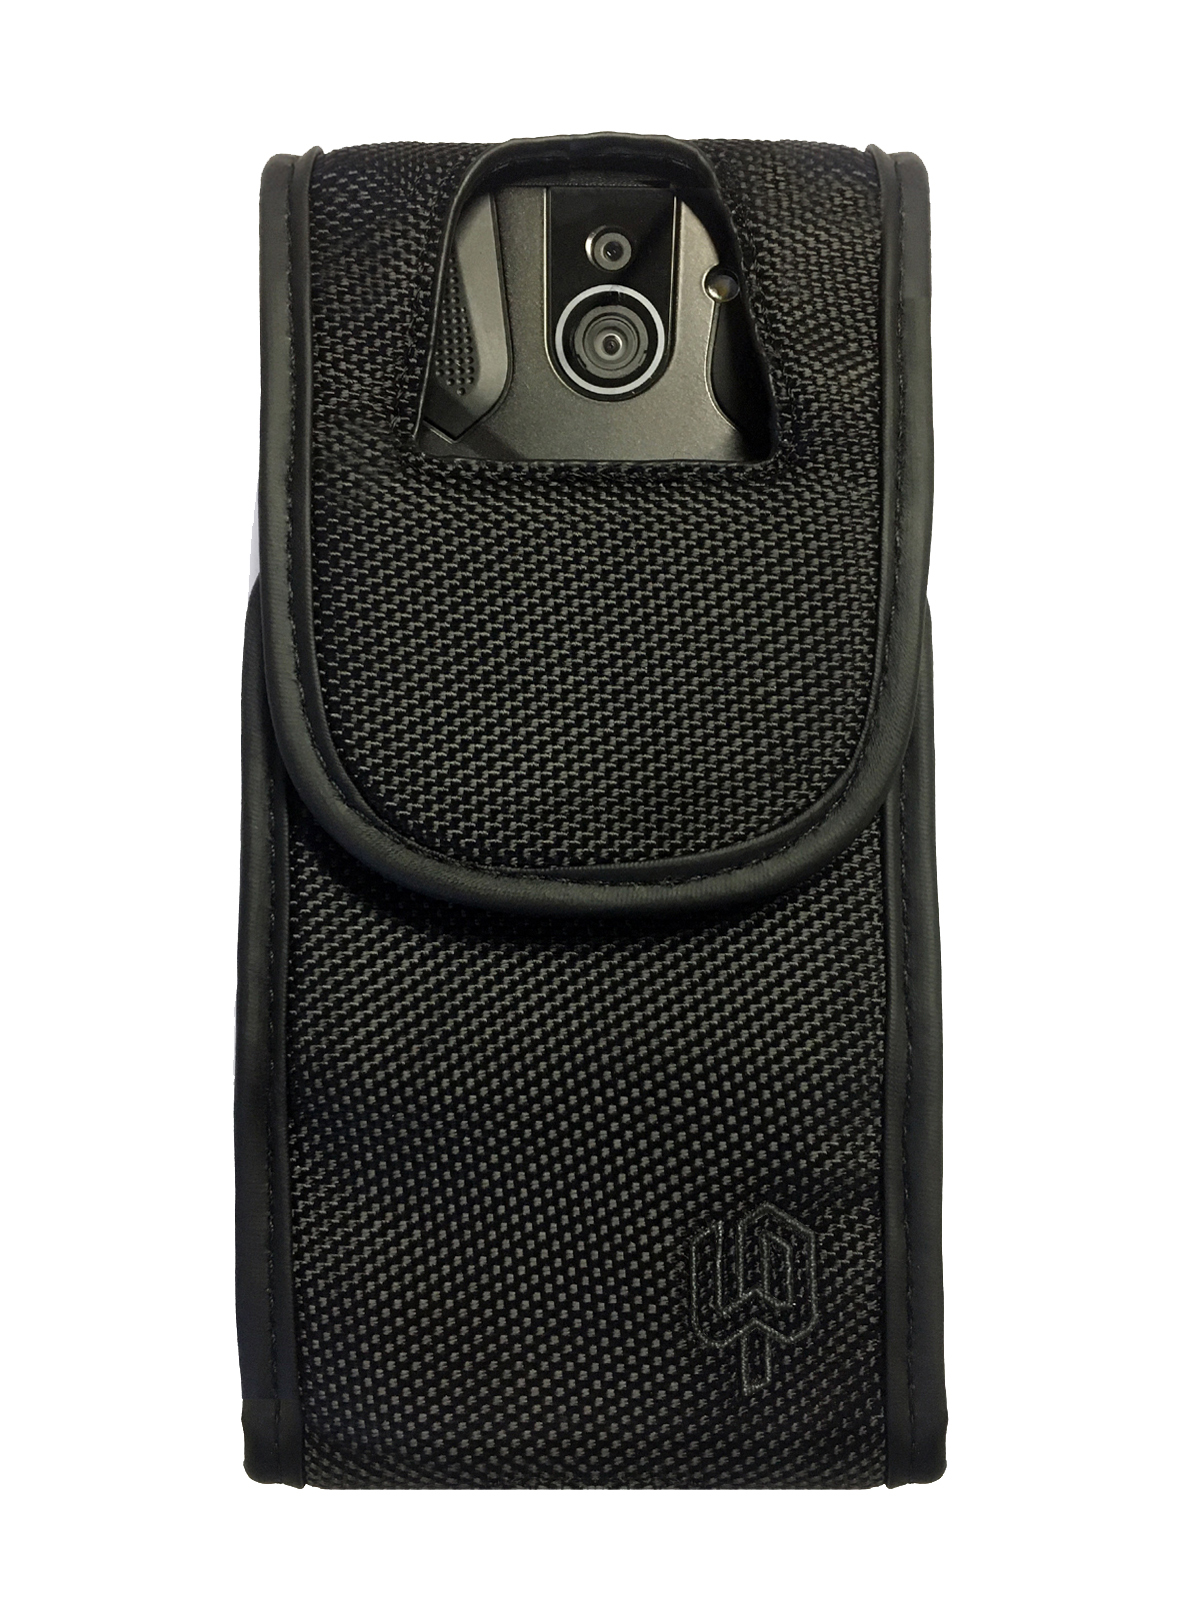 Kyocera DuraForce PRO 2 Case Ballistic Nylon Body Cam Case with Magnet ...